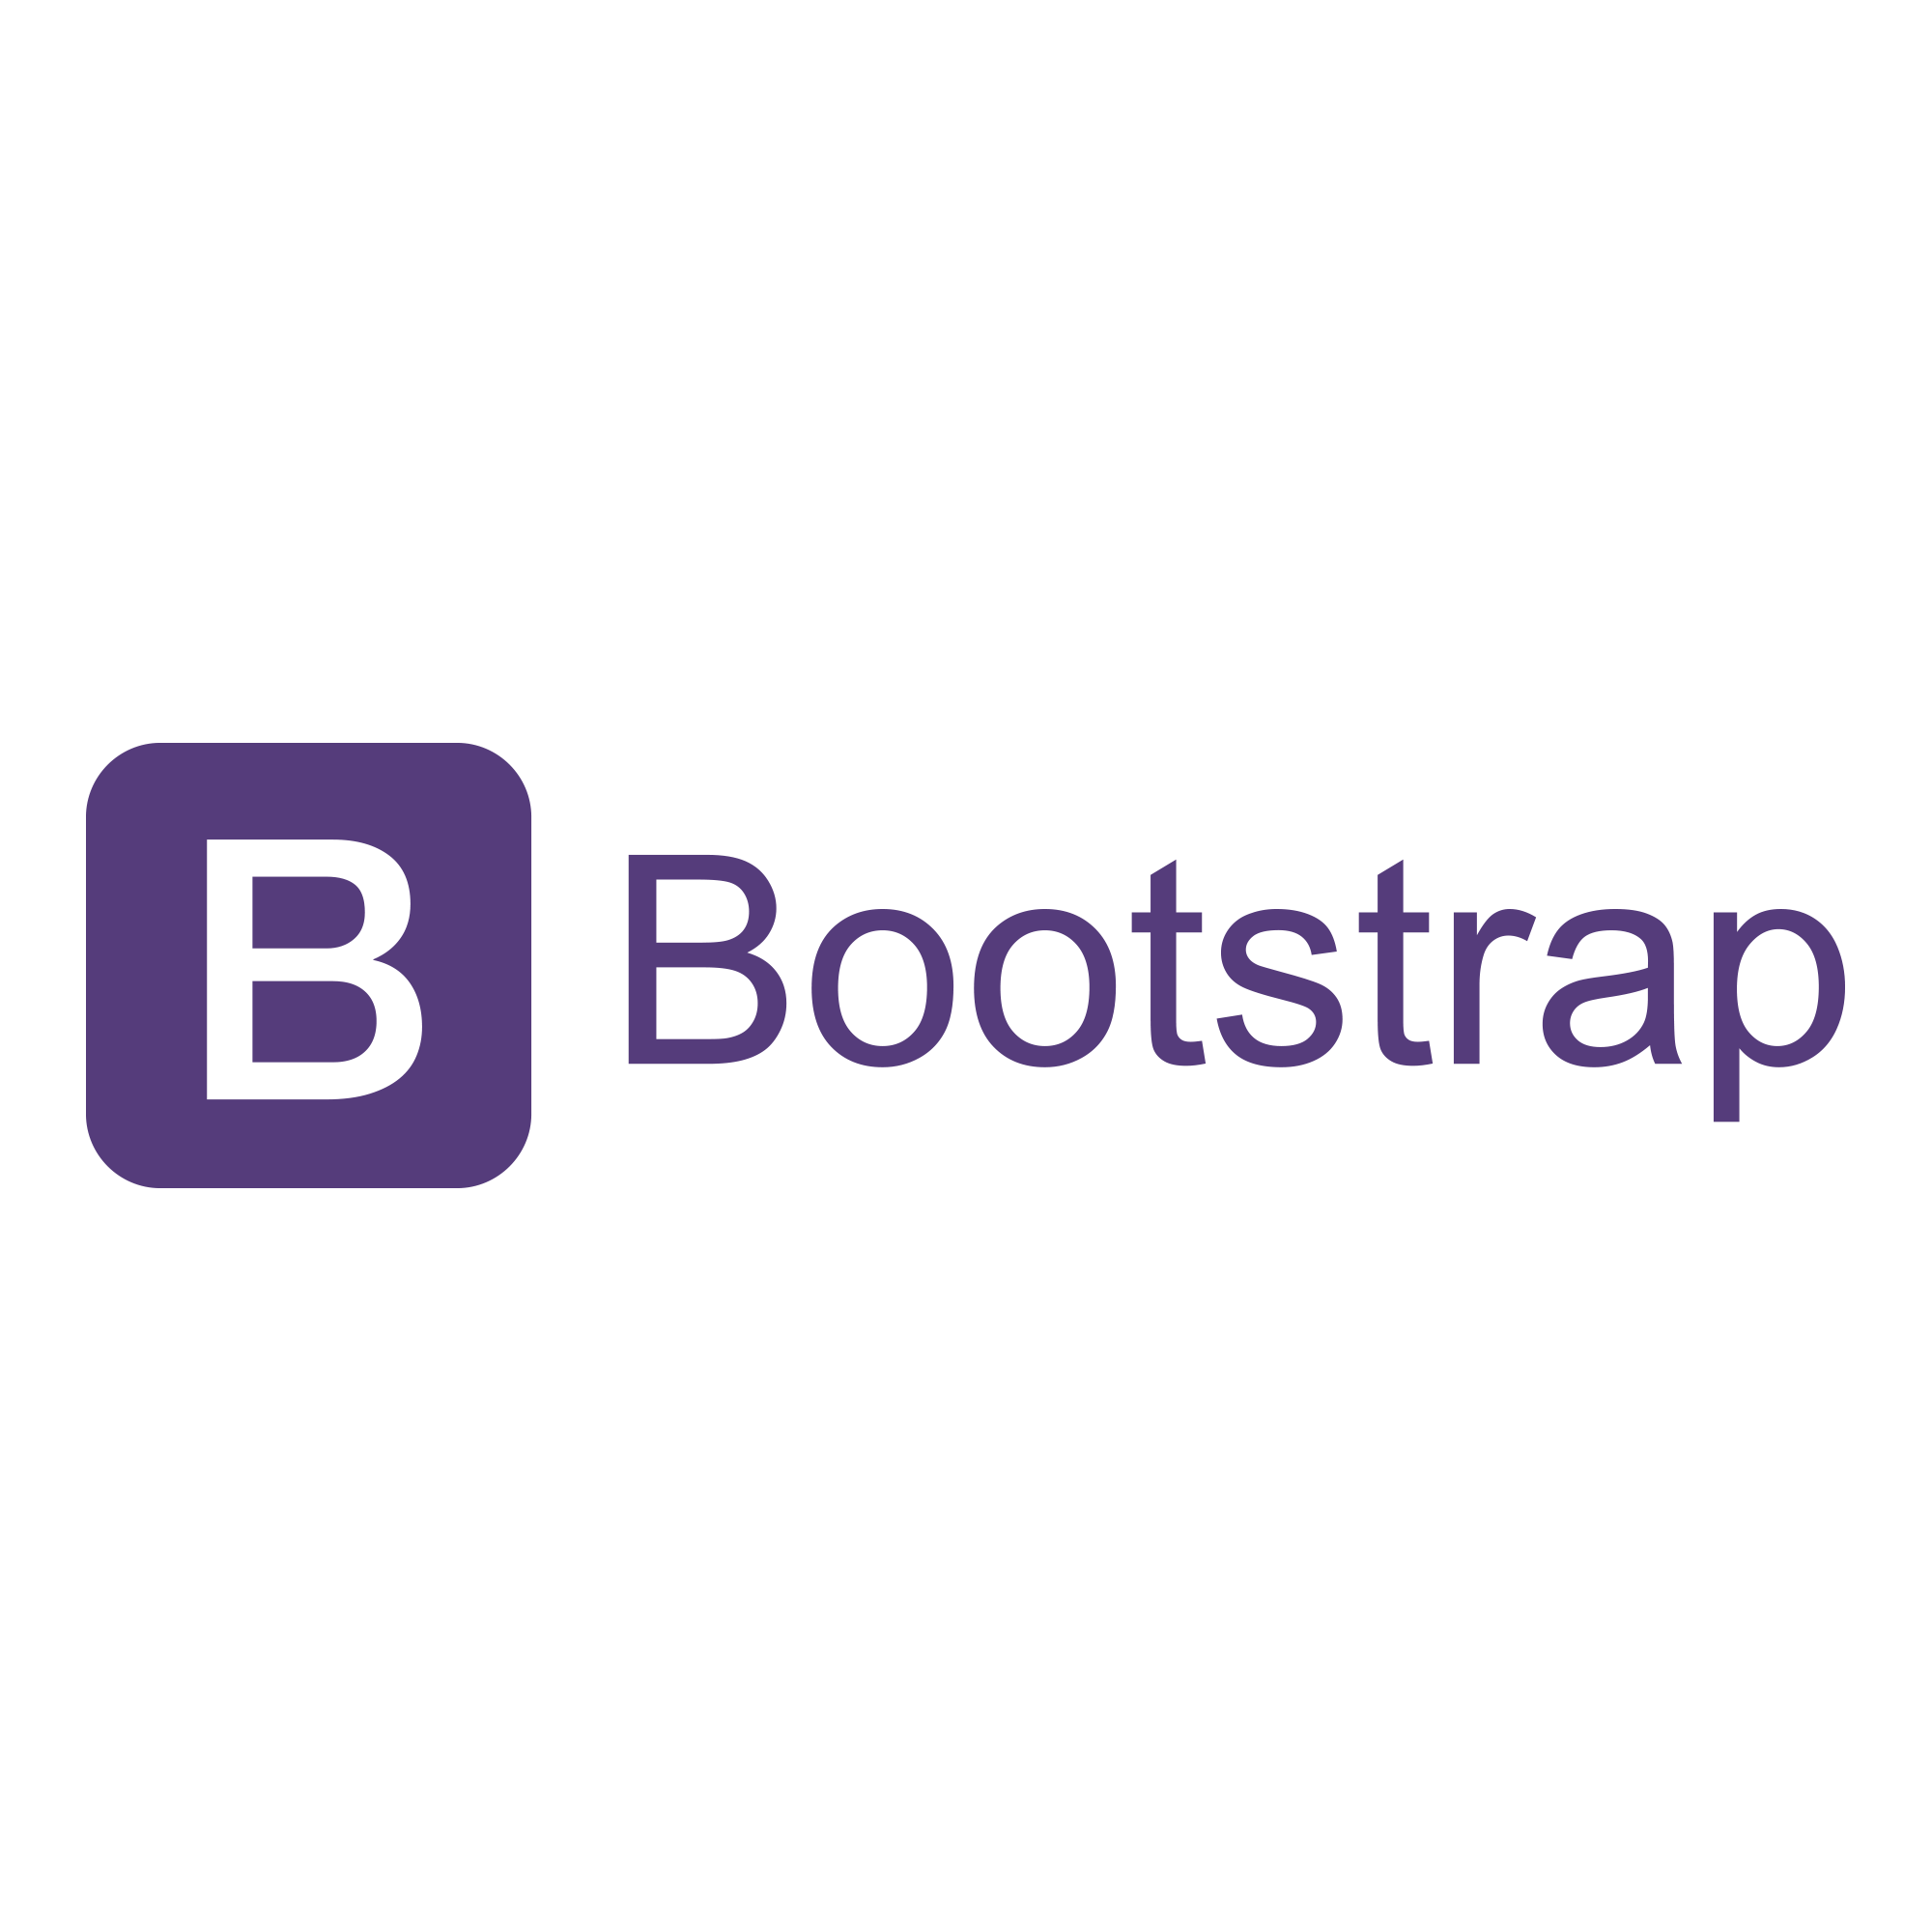 Bootstrap boot. Bootstrap. Картинка Bootstrap. Бутстрап логотип. Логотип Bootstrap PNG.